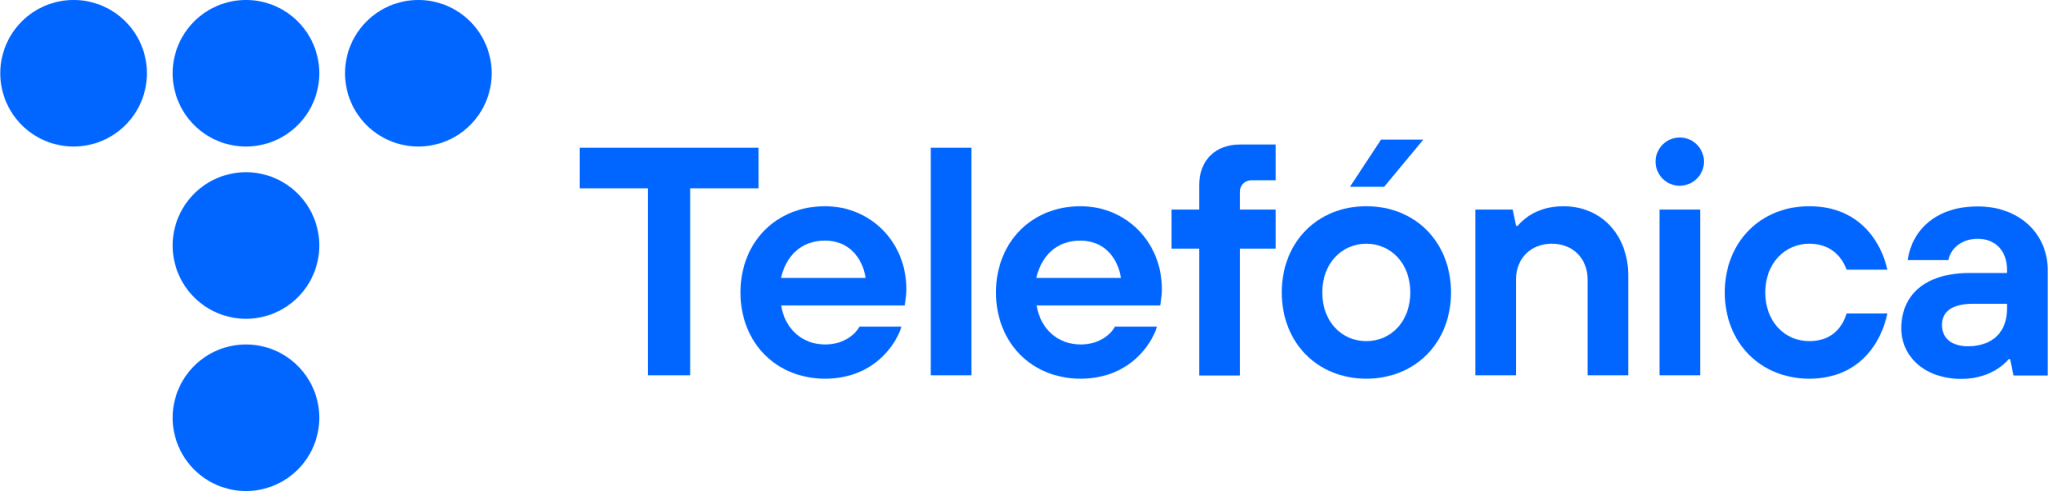 Telefonica 2021 Logo.svg